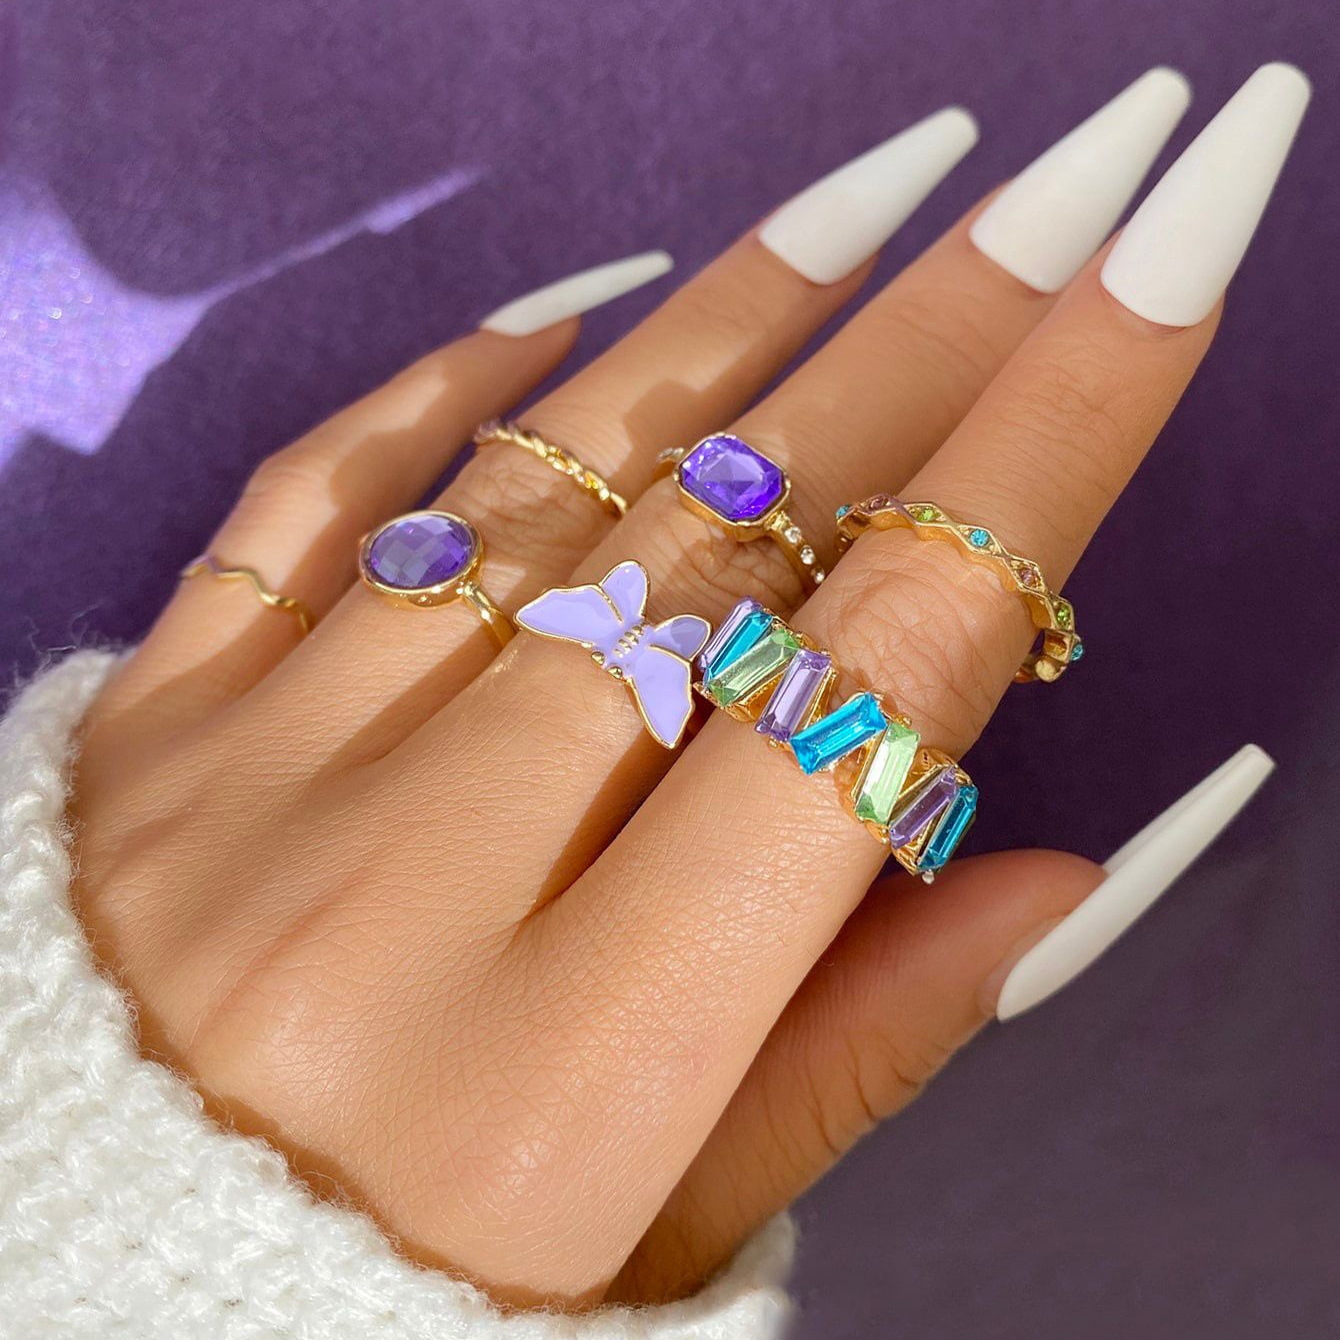 5589501 7Pcs Crystal Purple Rings Set Romantic Gold Color Irregular Rings Twist Wave Geometric Rings Jewelry for Women